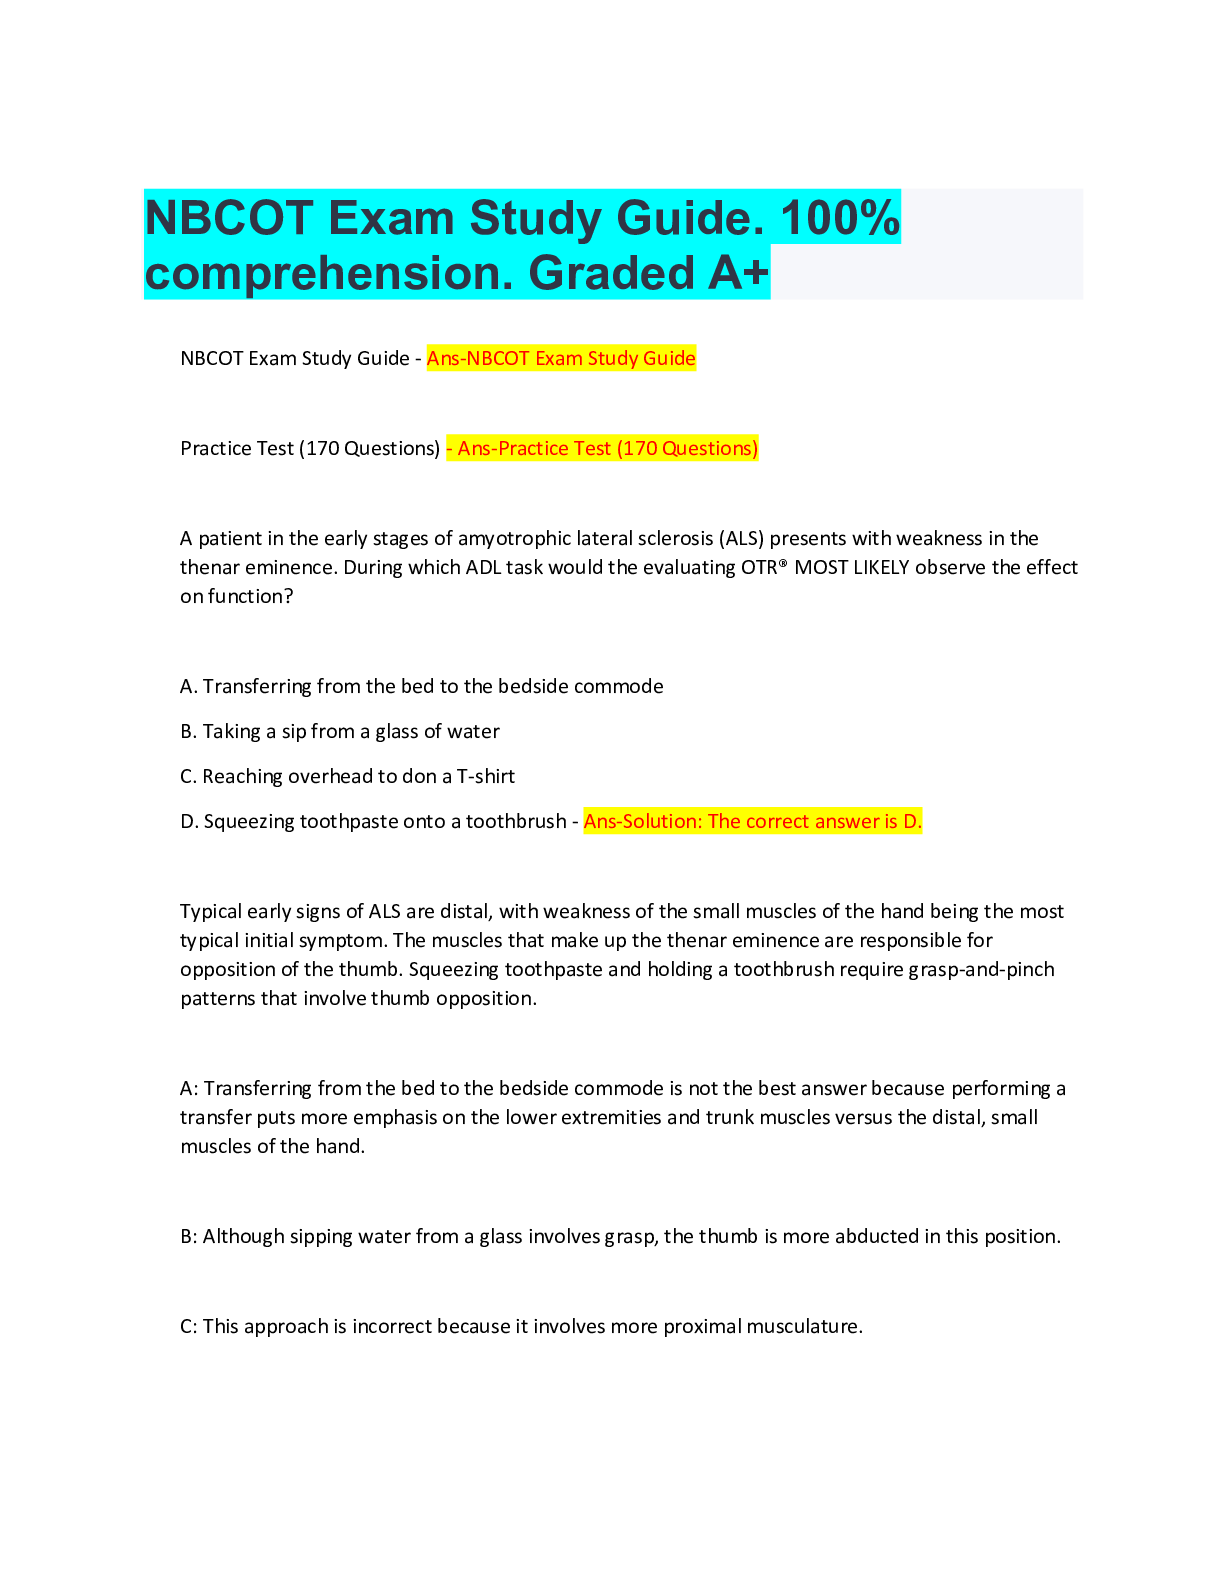 NBCOT Exam Study Guide 100 comprehension Graded A+